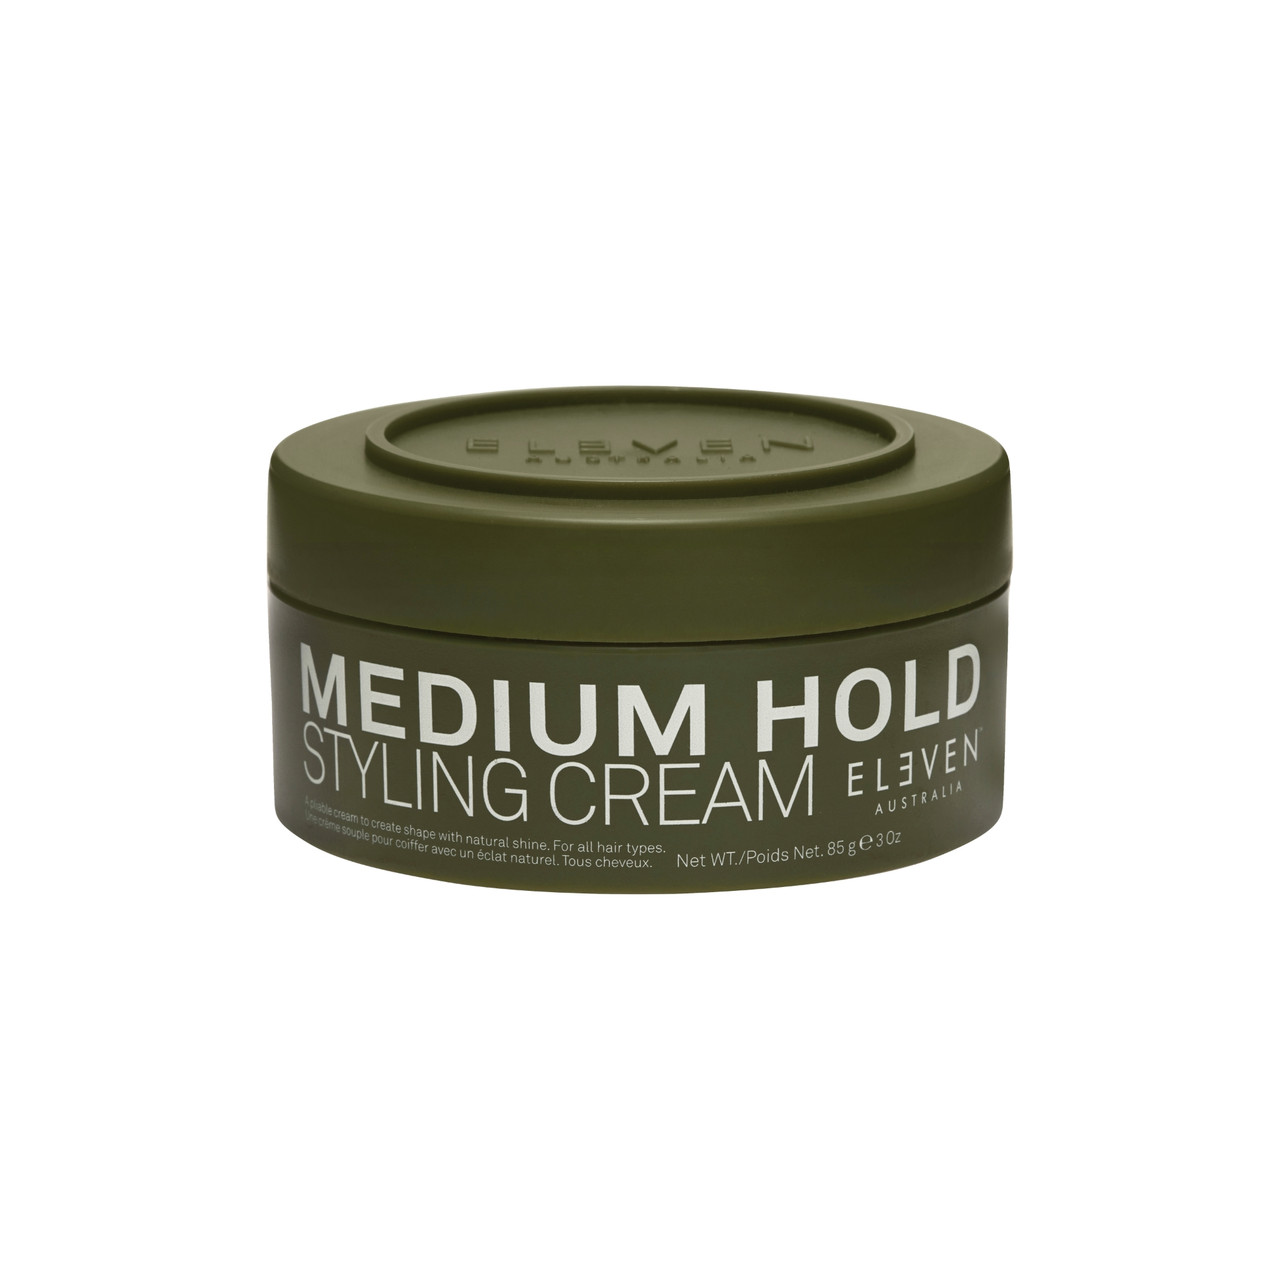 ELEVEN Medium Hold Styling Cream